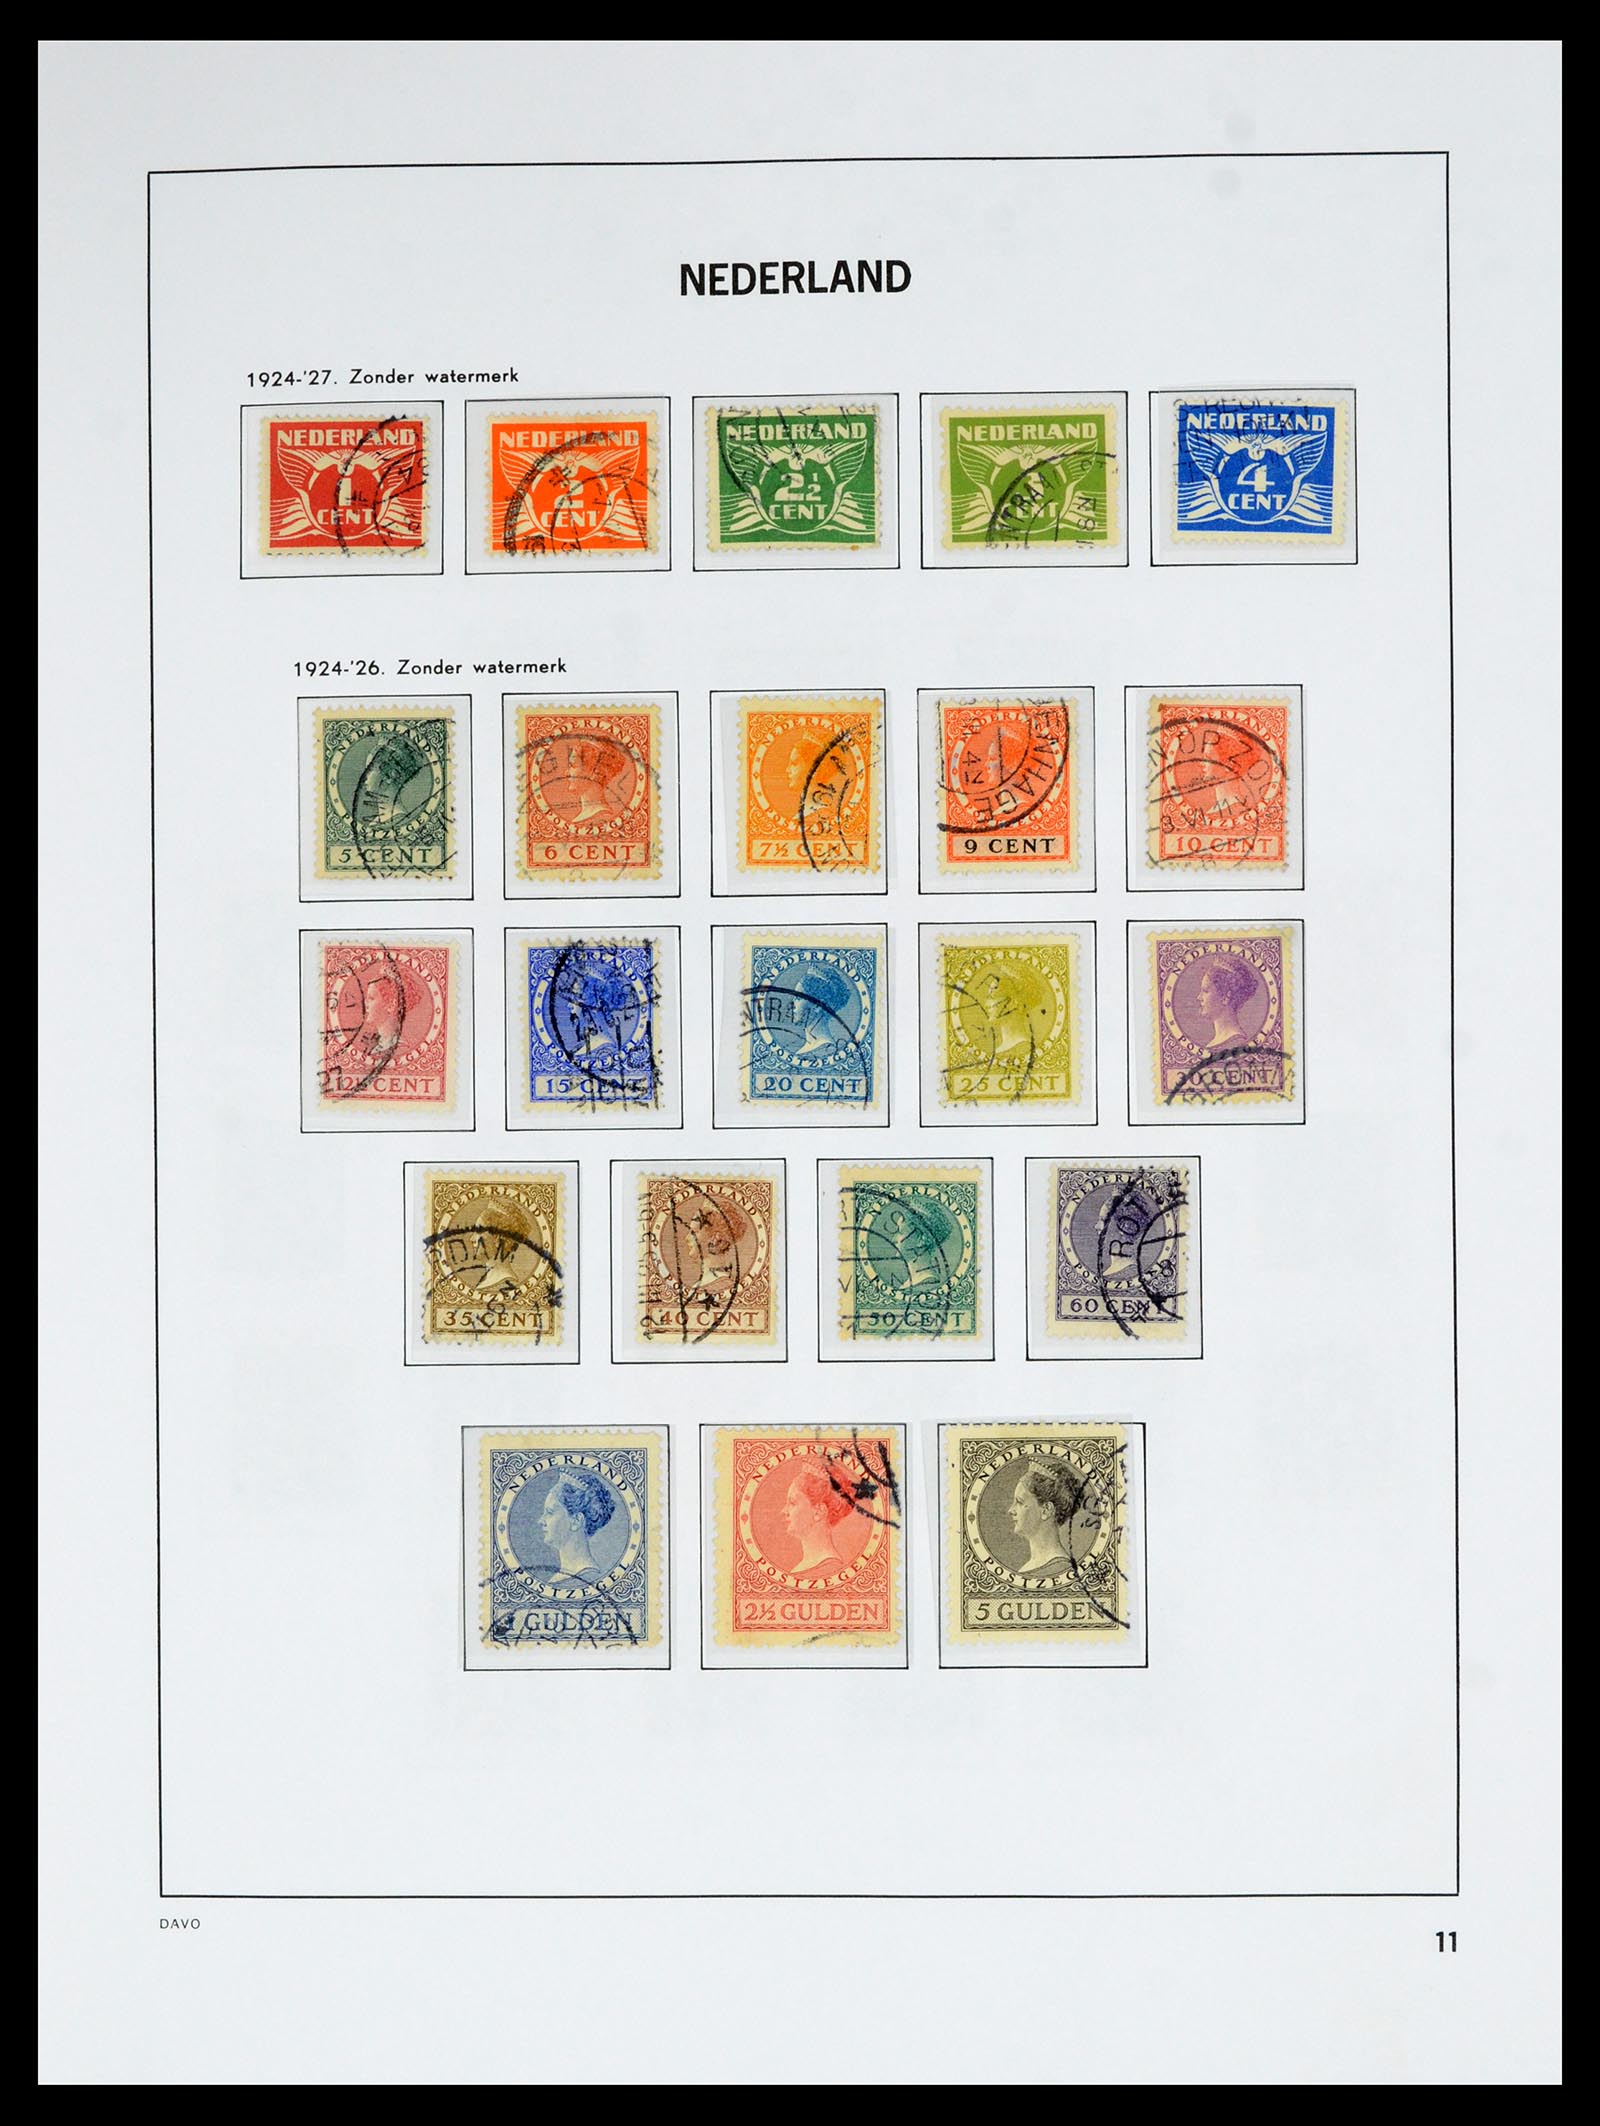 36629 011 - Stamp collection 36629 Nederland 1852-1989.